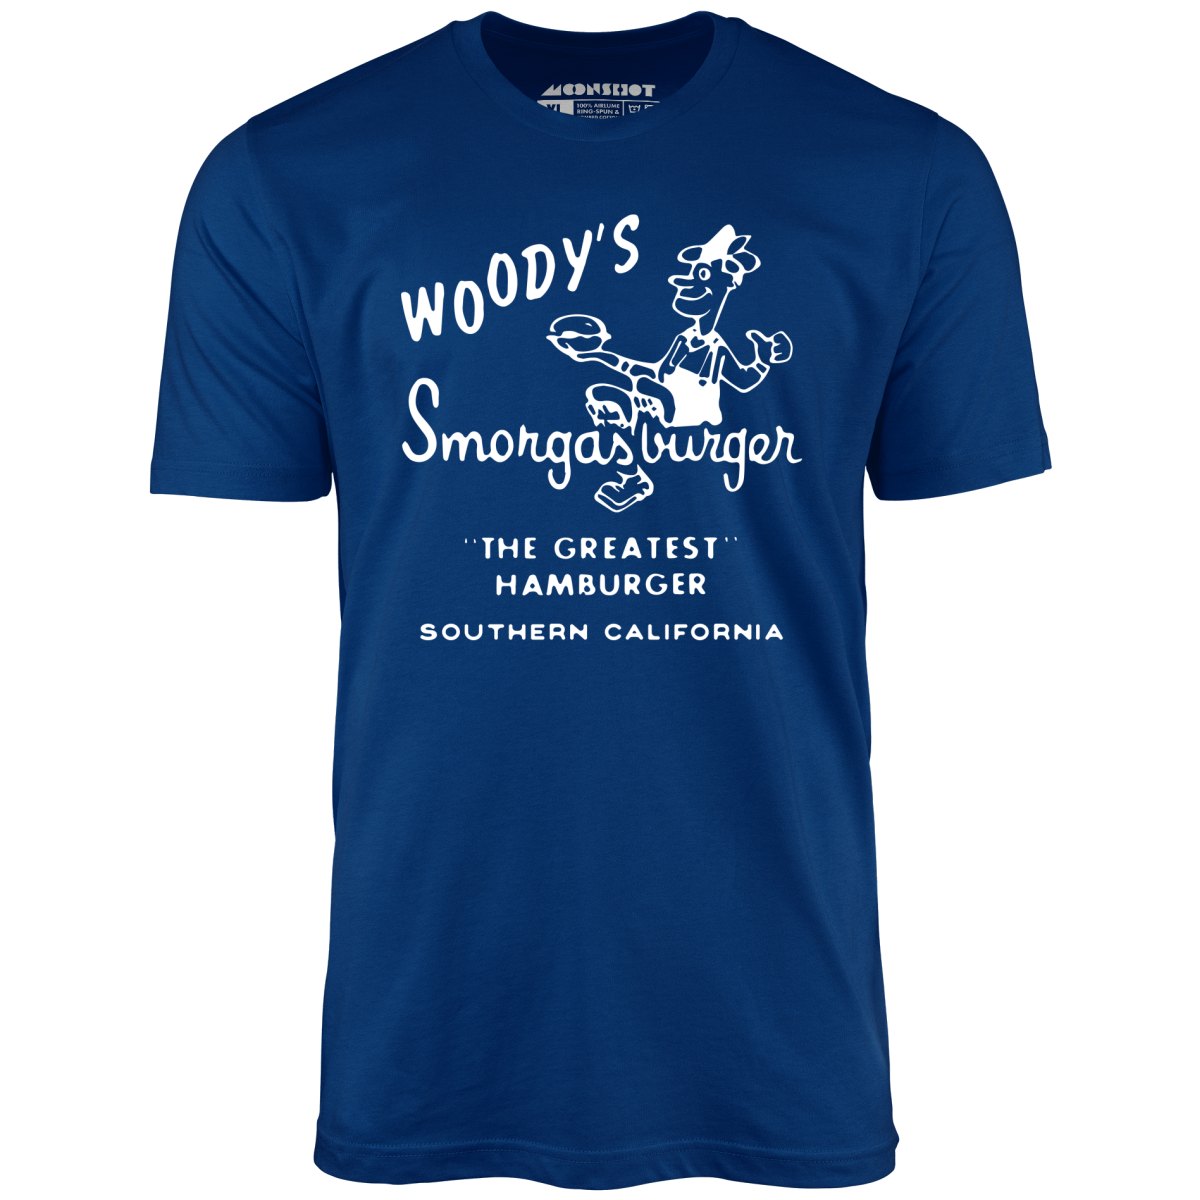 Woody's Smorgasburger - California - Vintage Restaurant - Unisex T-Shirt